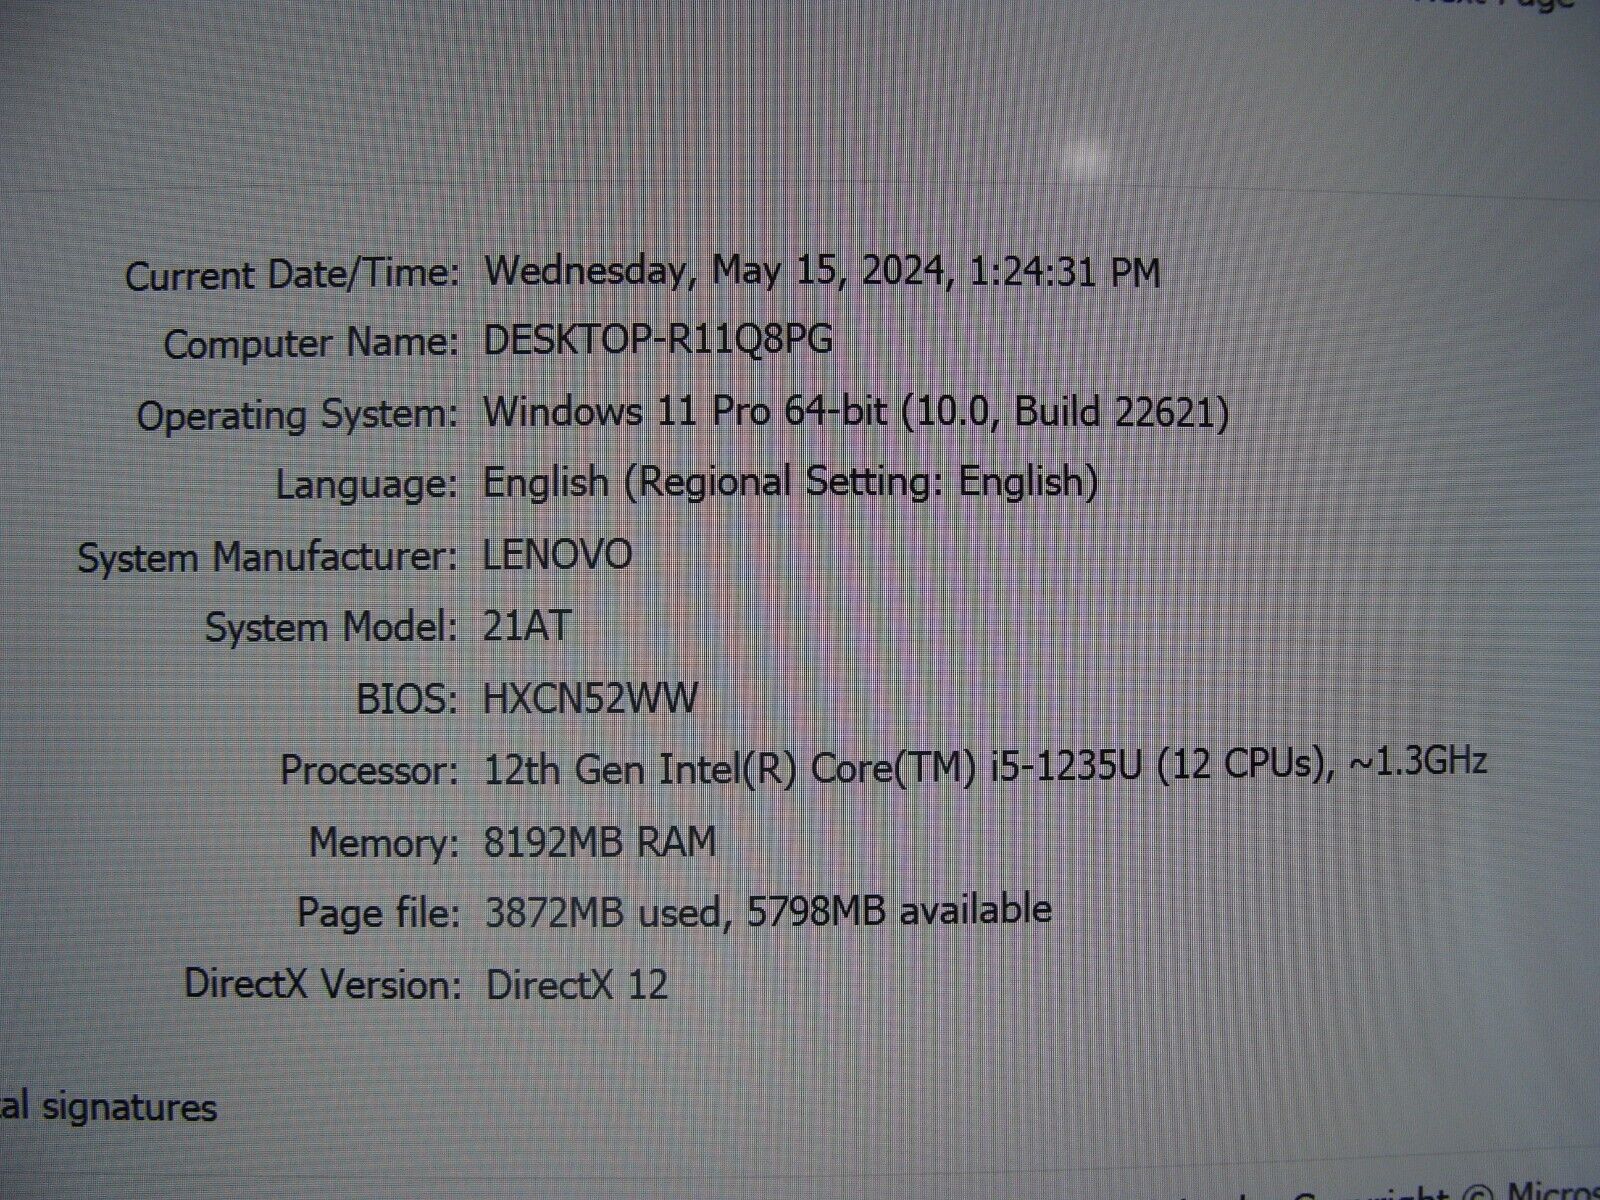 Lenovo ThinkBook 13x G2 IAP 13.3